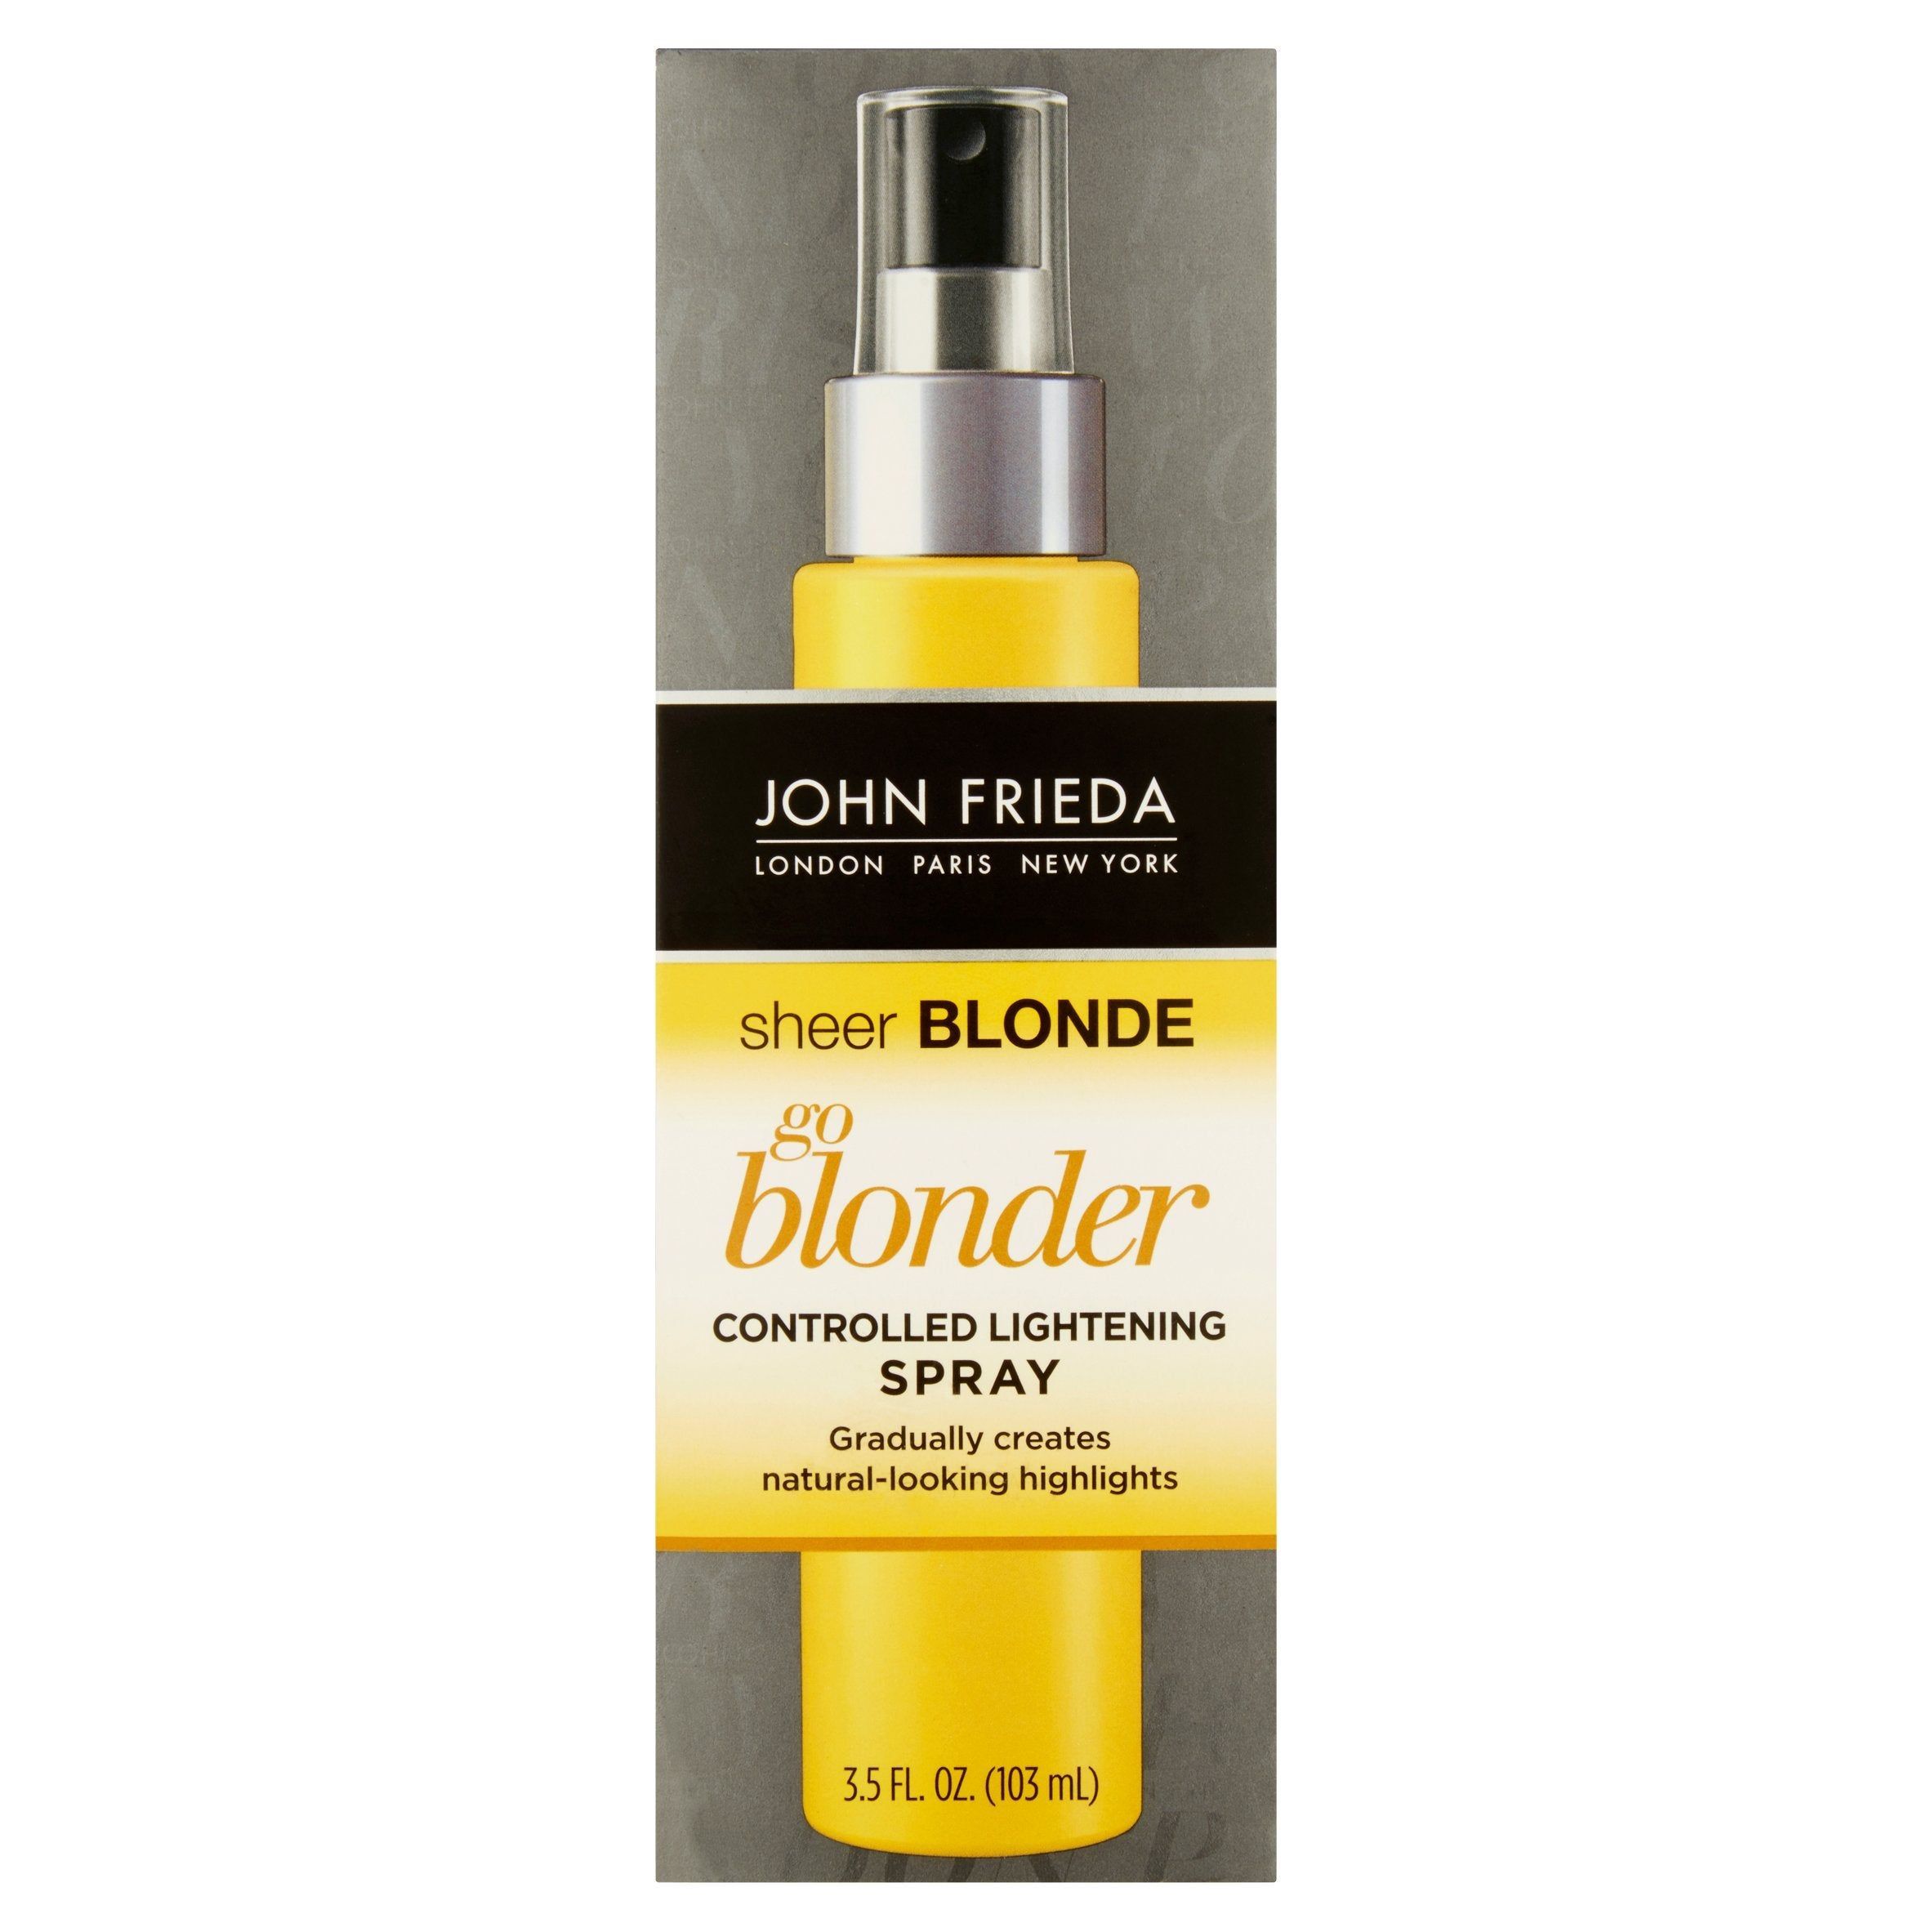 Sheer blonde. John Frieda Sheer blonde go blonder Lightening Spray. John Frieda шампунь Sheer blonde go blonder. Спрей John Frieda Sheer blonde go blonder. Спрей John Frieda blonde.